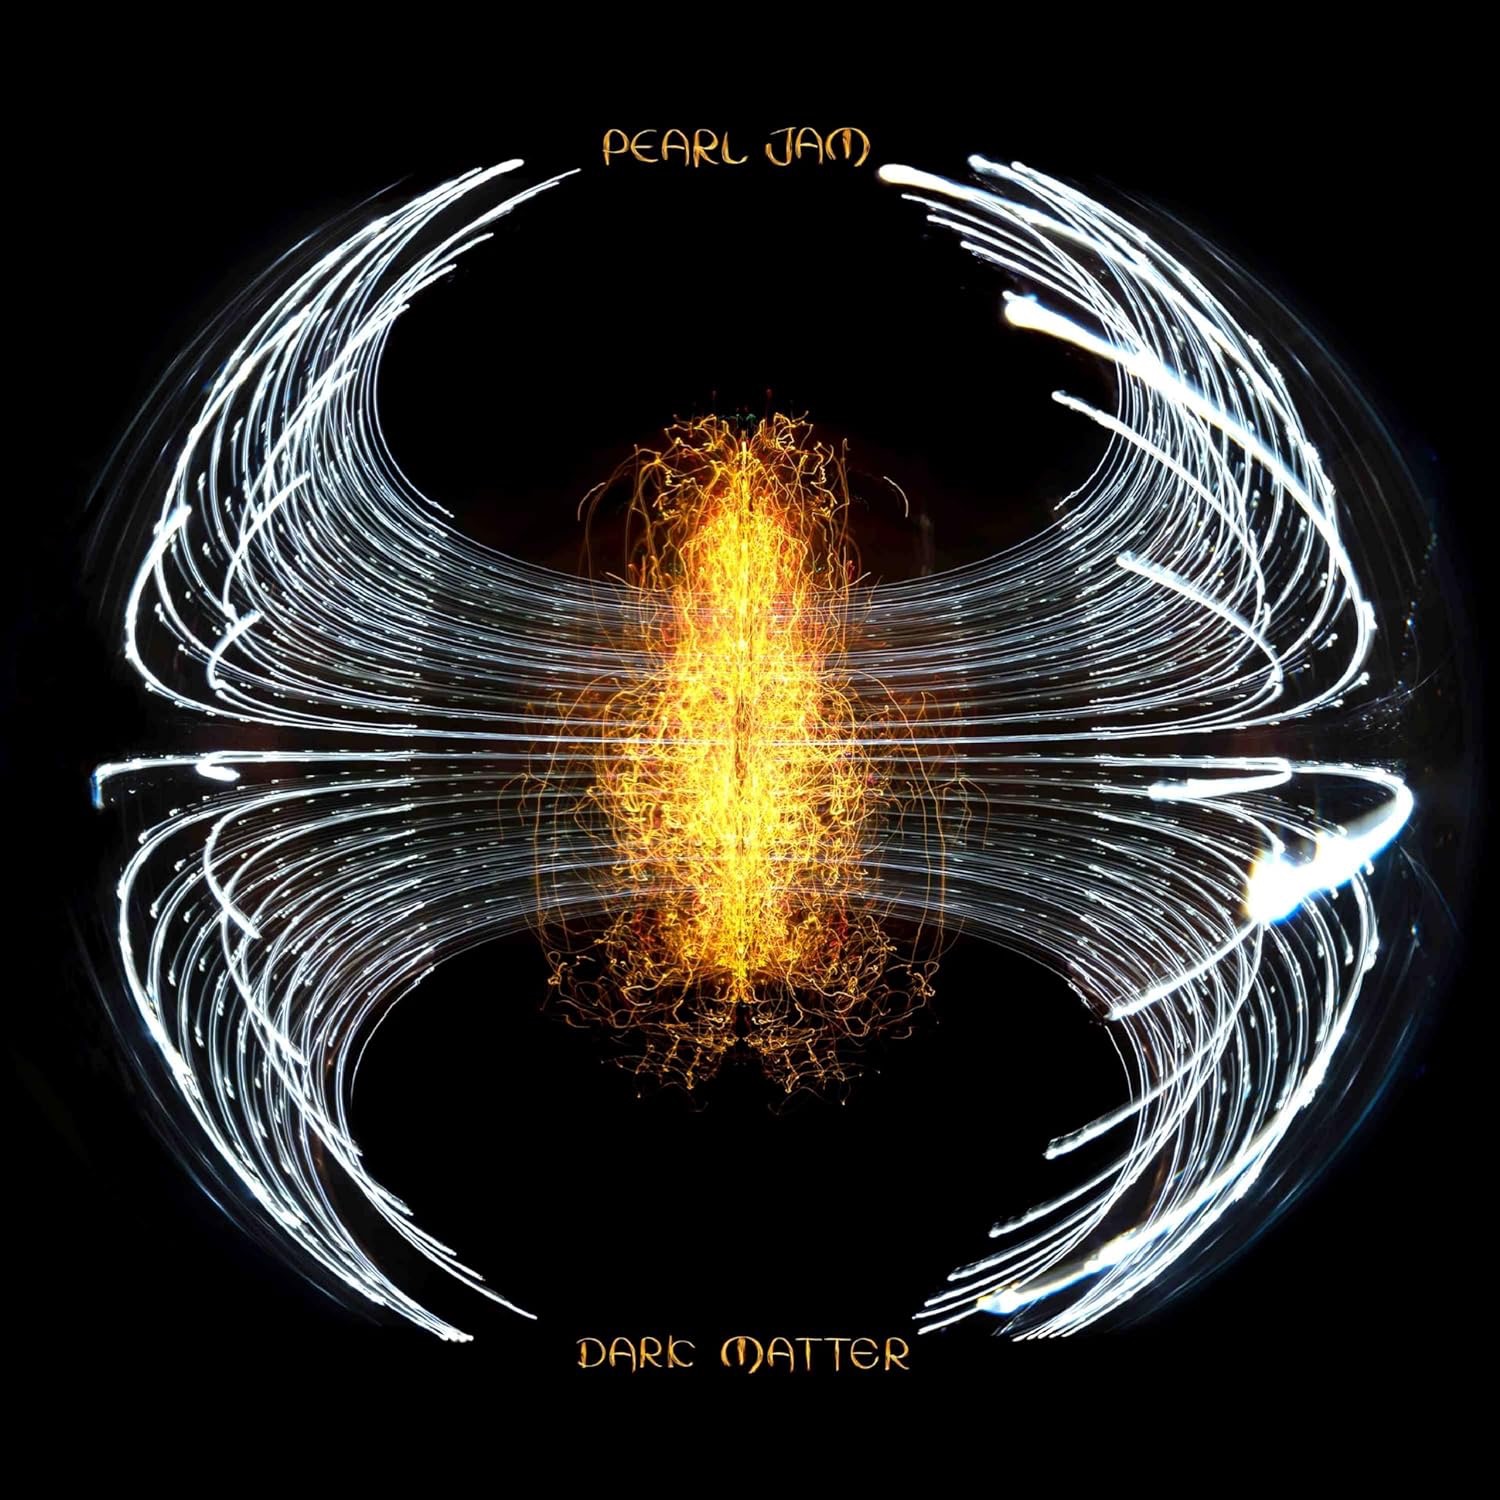 Pearl Jam – Dark Matter Deluxe Edition Review